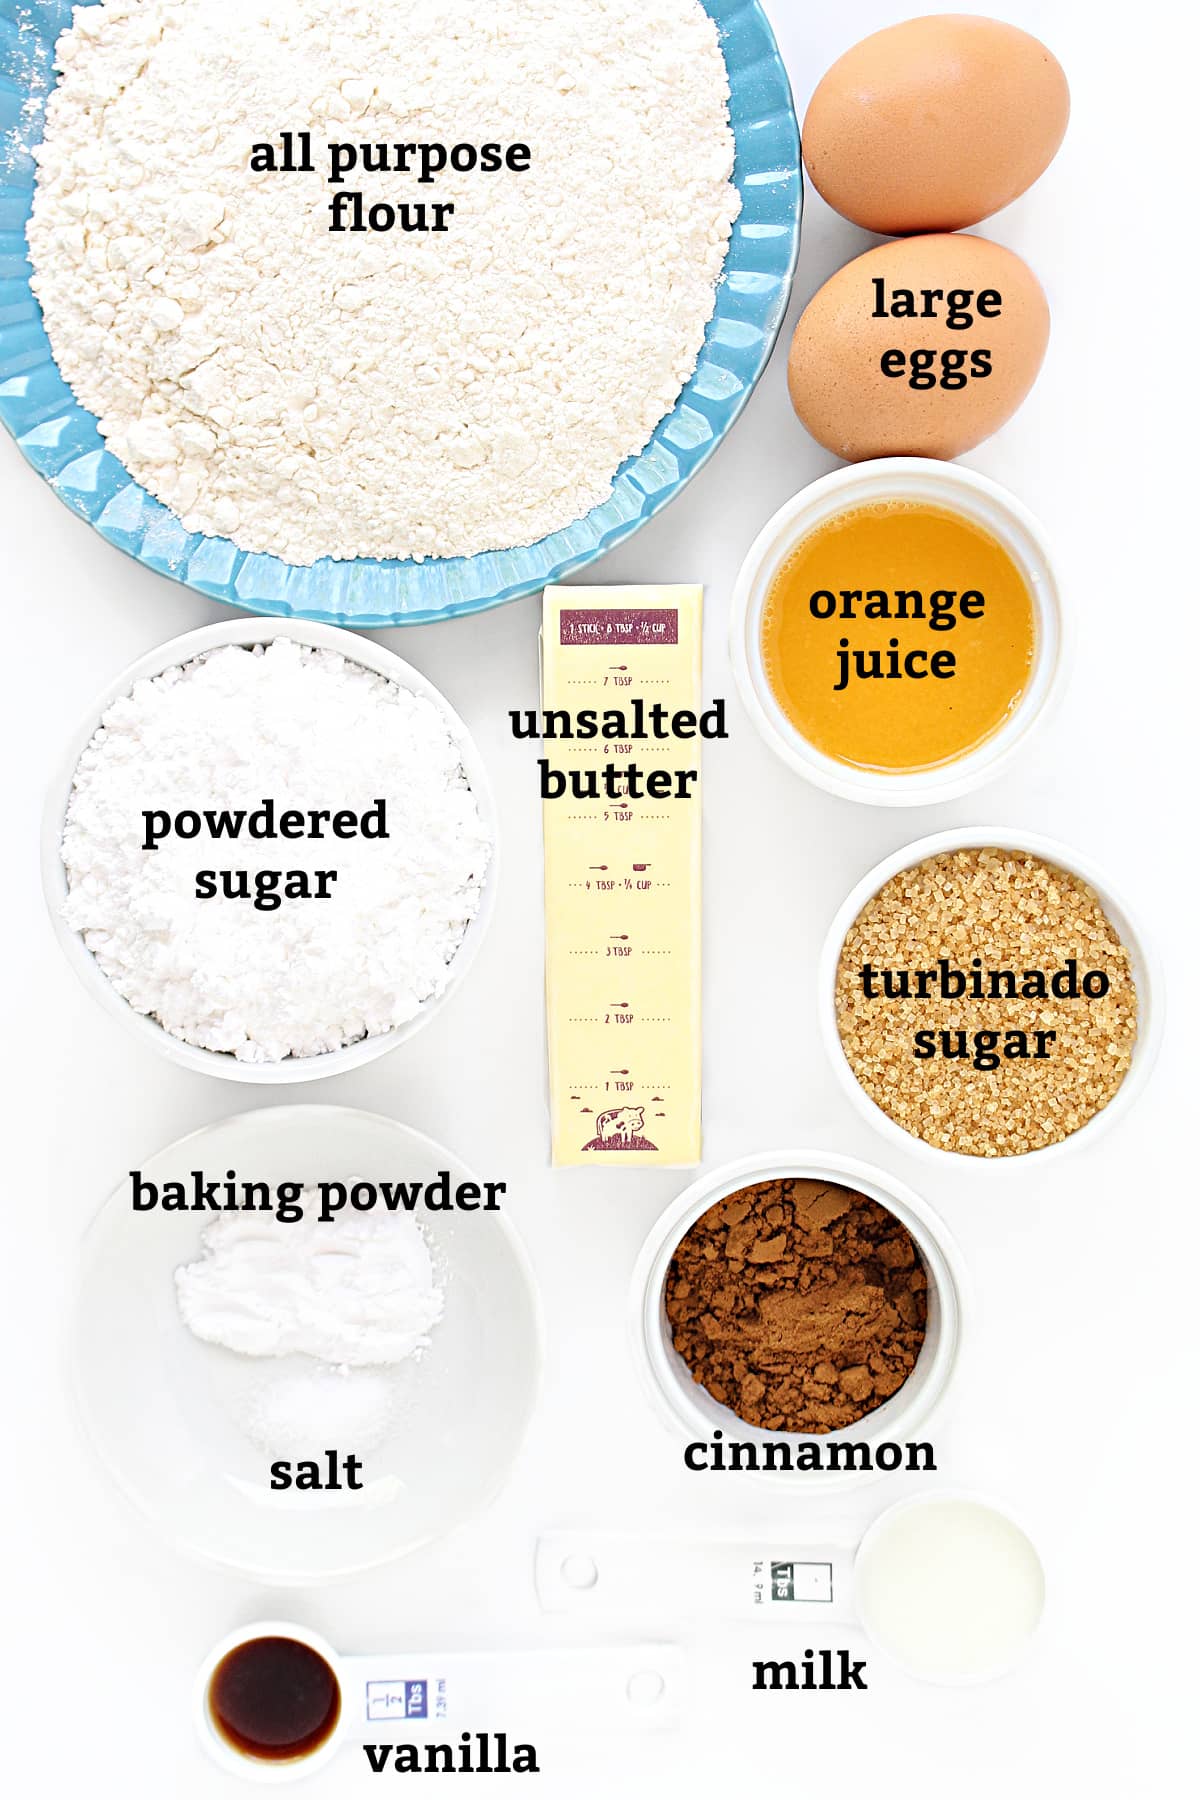 Ingredients:  flour, eggs,orange juice, powdered sugar, butter, turbinado sugar, cinnamon, milk, vanilla, salt, baking powder.